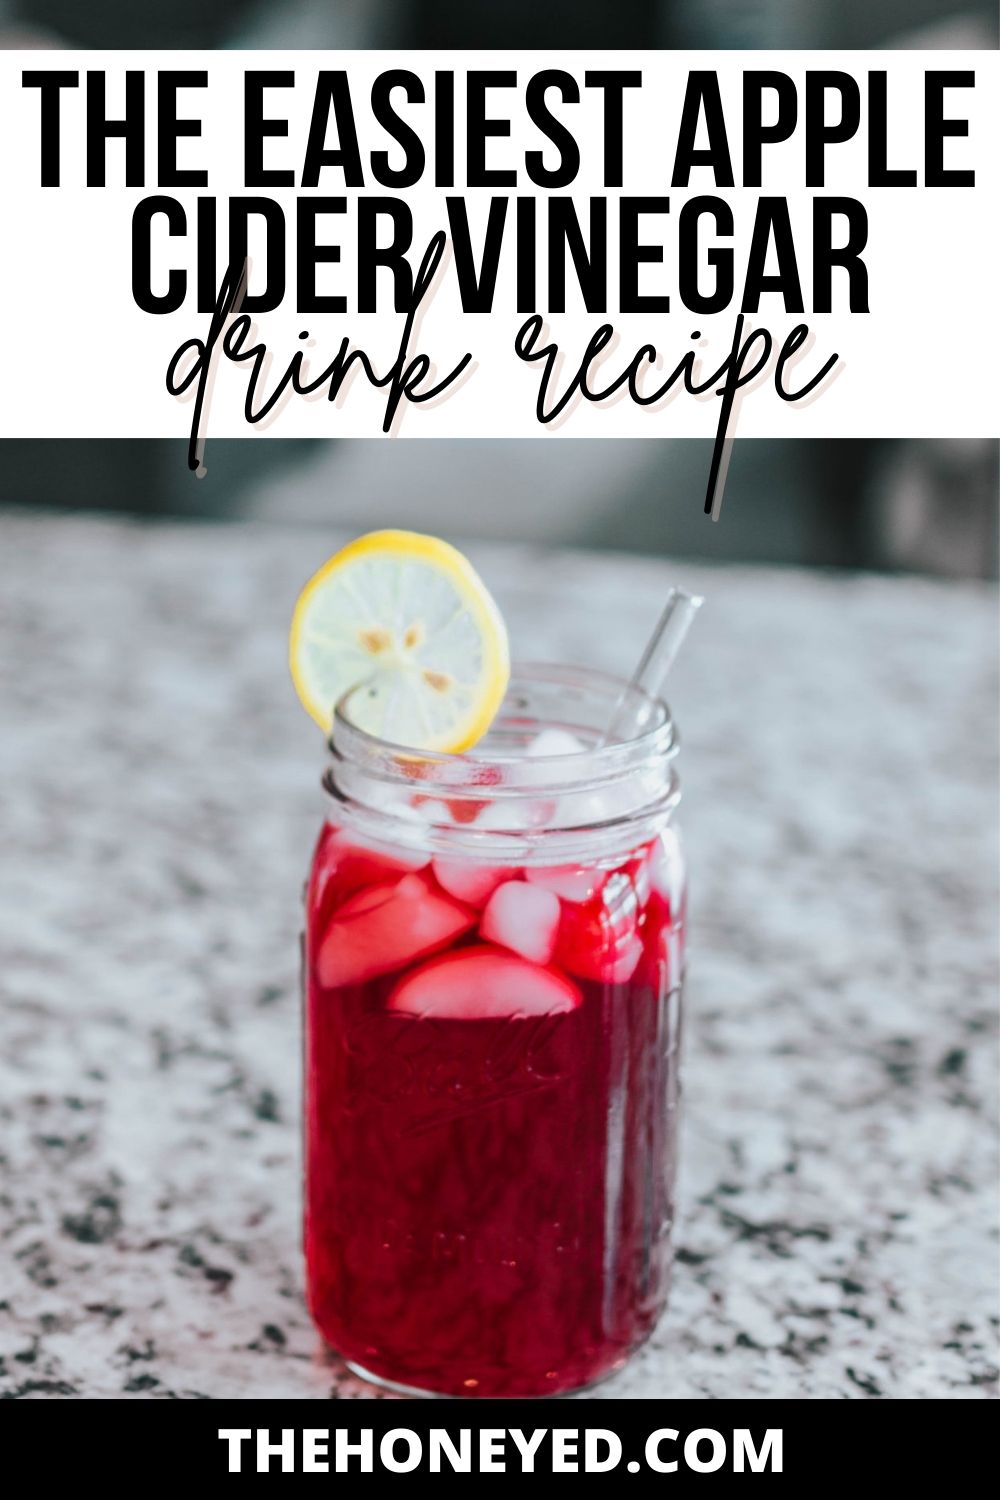 The Easiest Apple Cider Vinegar Drink Recipe